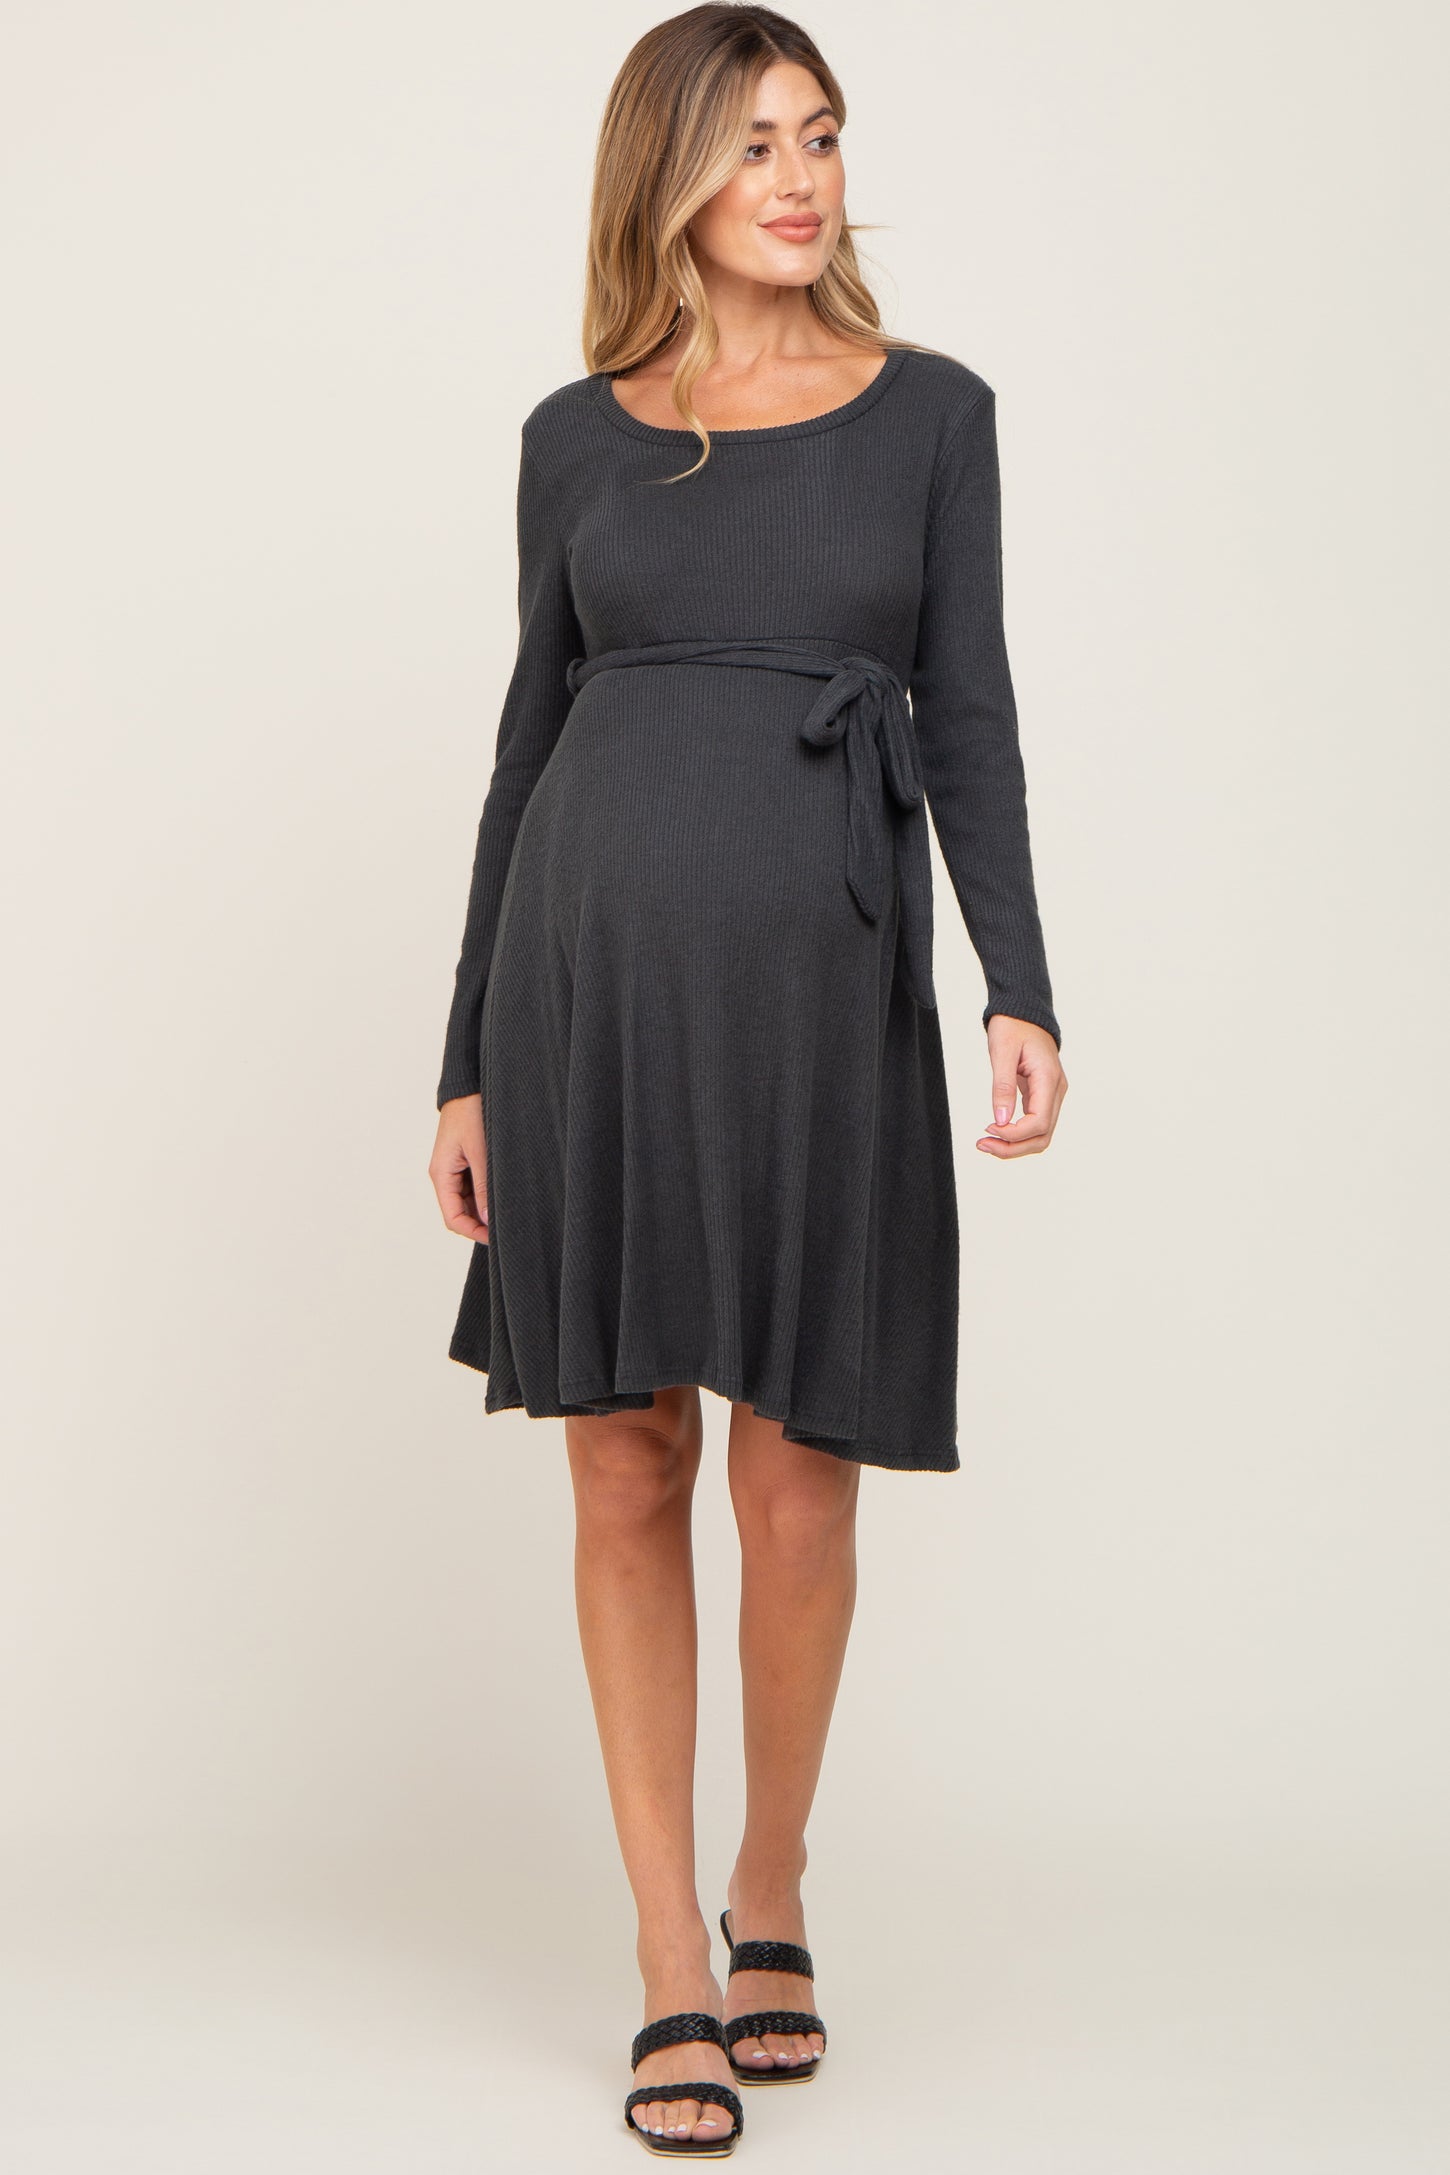 Charcoal Soft Rib Knit Sash Tie Maternity Dress– PinkBlush